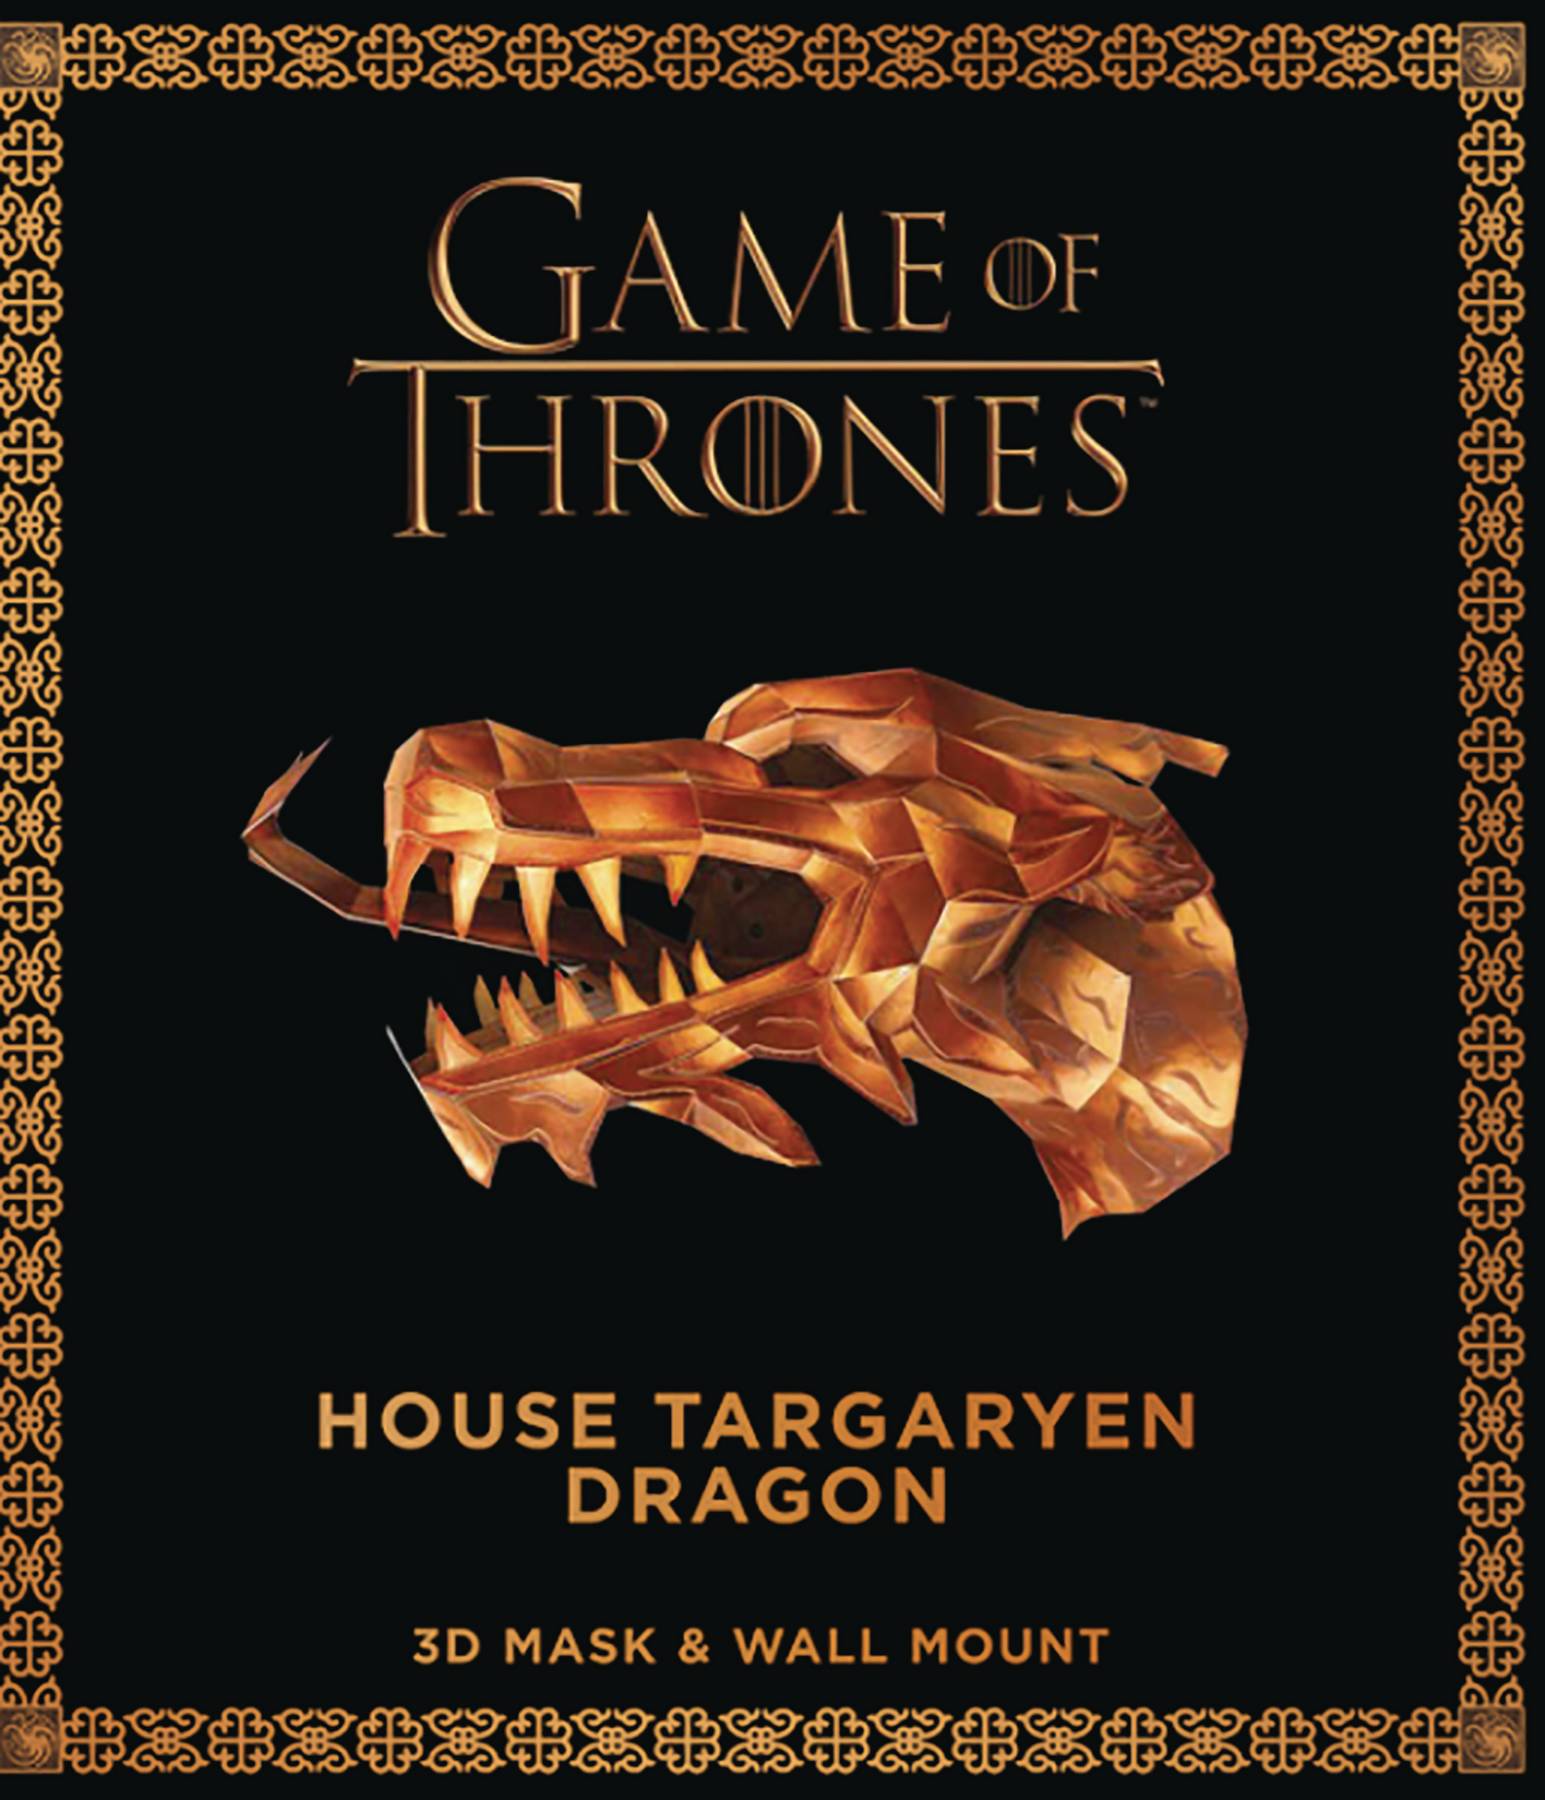 Game of Thrones Mask With Book #3 House Targaryen Dragon.